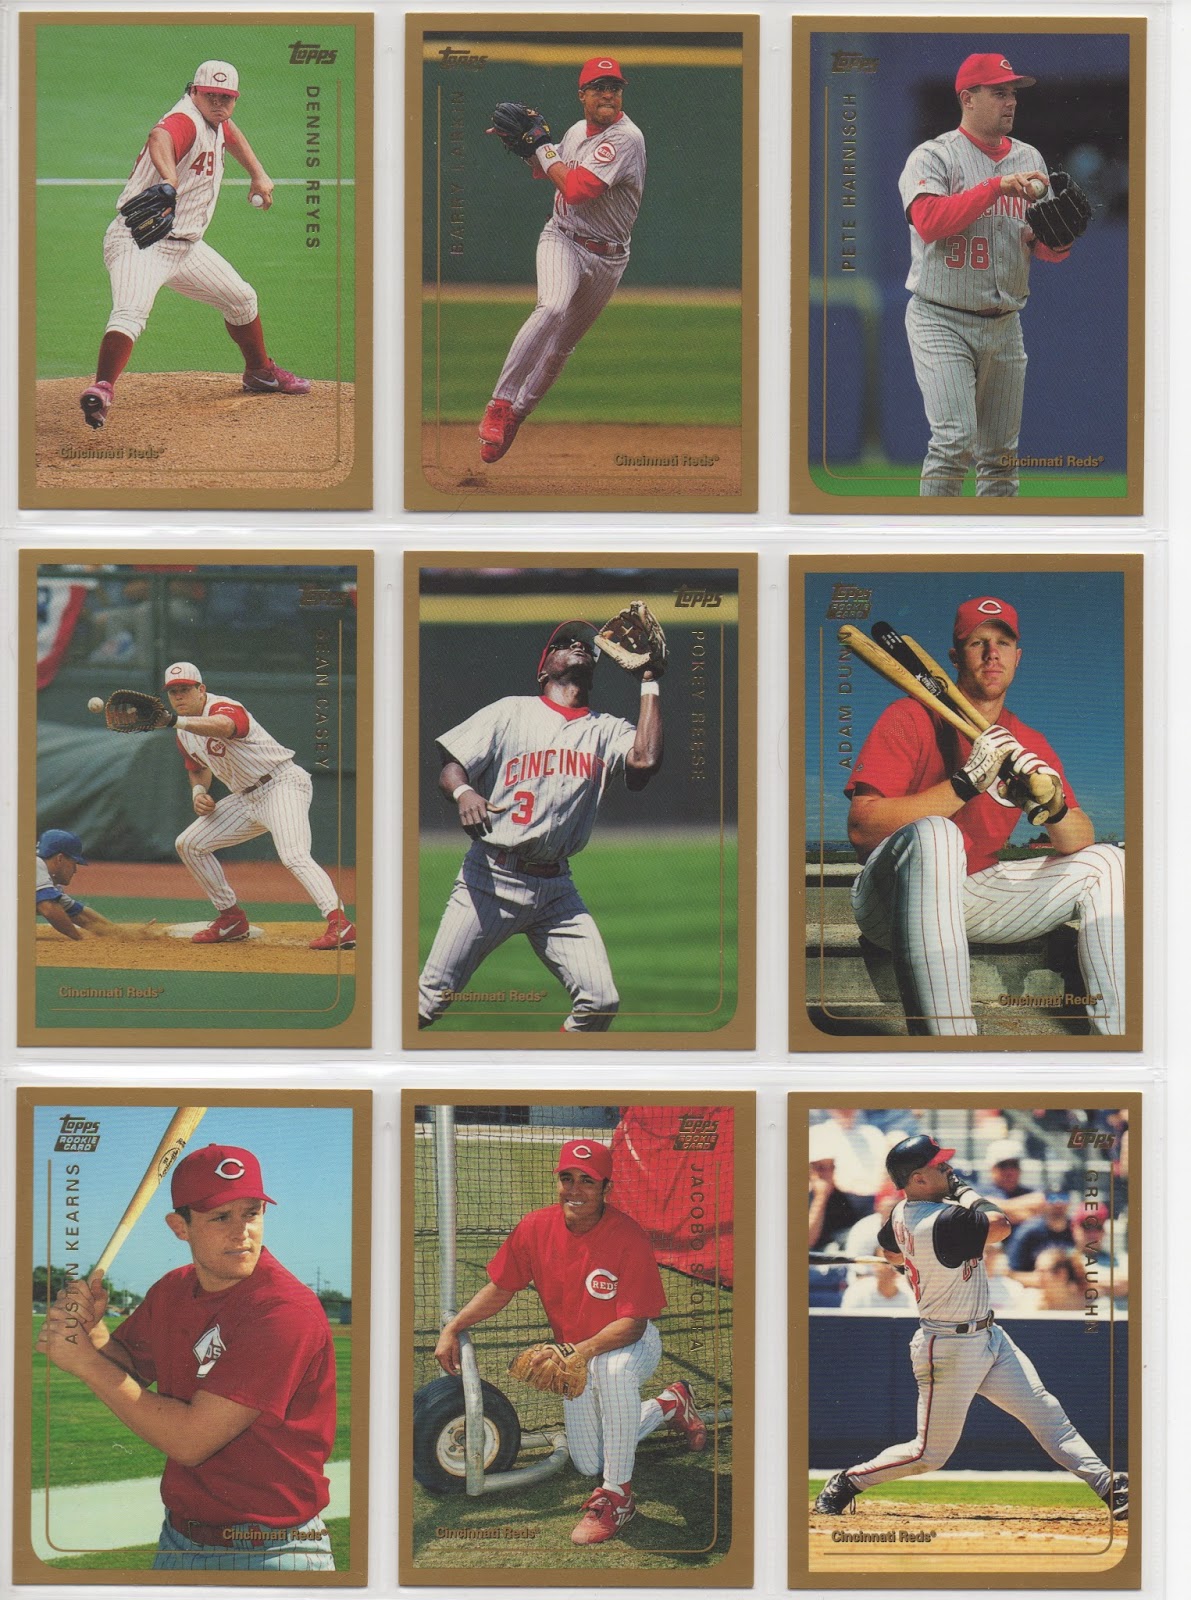 Cincinnati Reds Baseball Card Collector: 1999 Topps Cincinnati Reds Team Set1191 x 1600